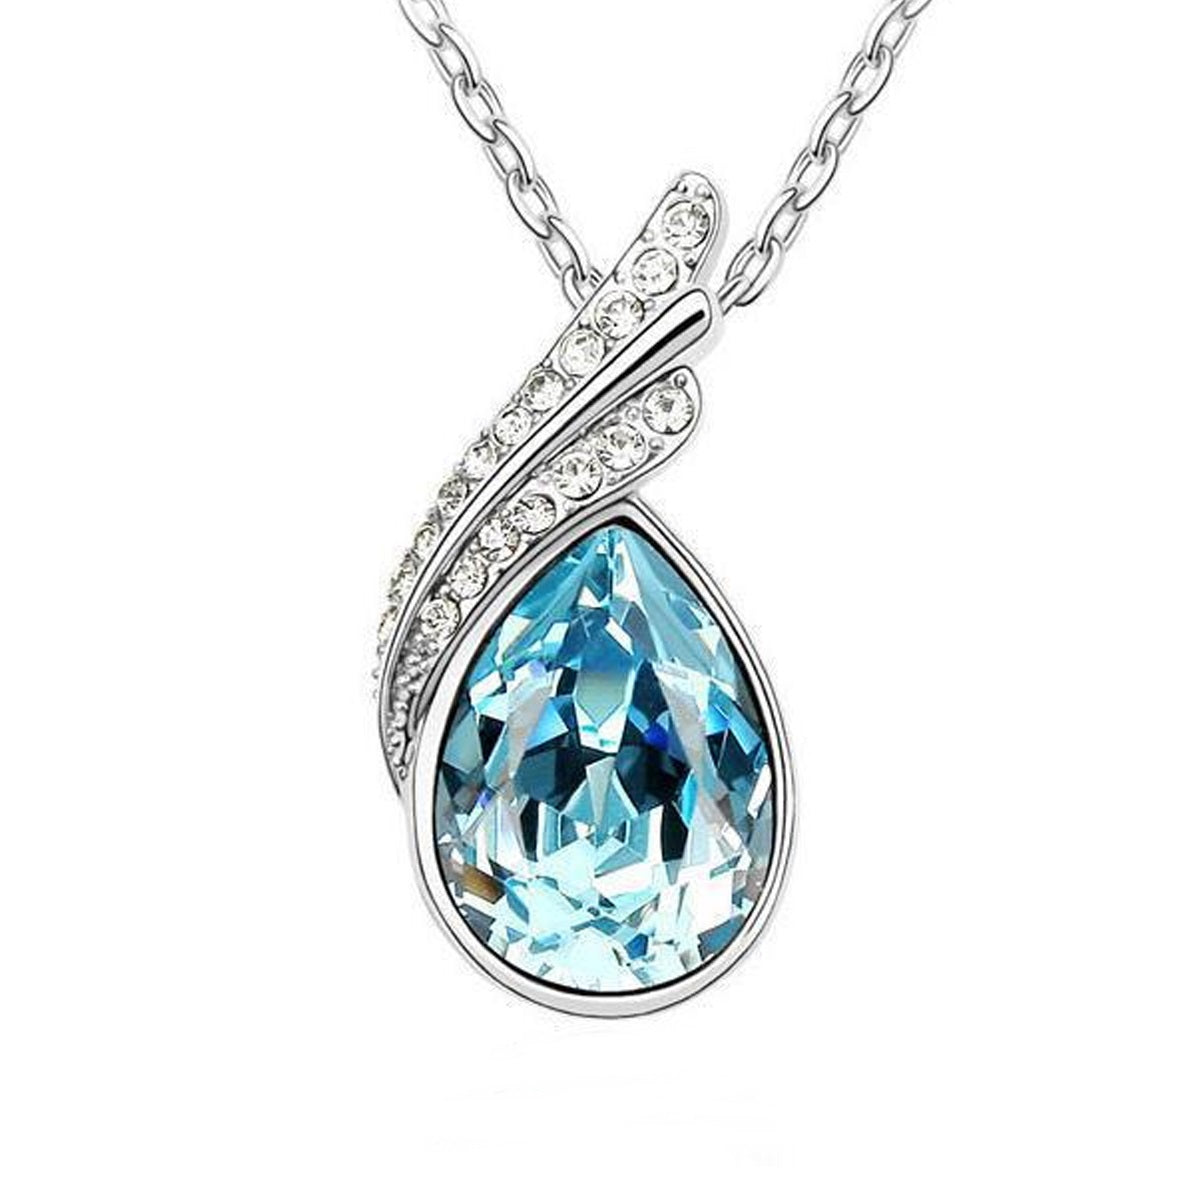 Wrapables Elegant Teardrop Crystal Pendant Necklace